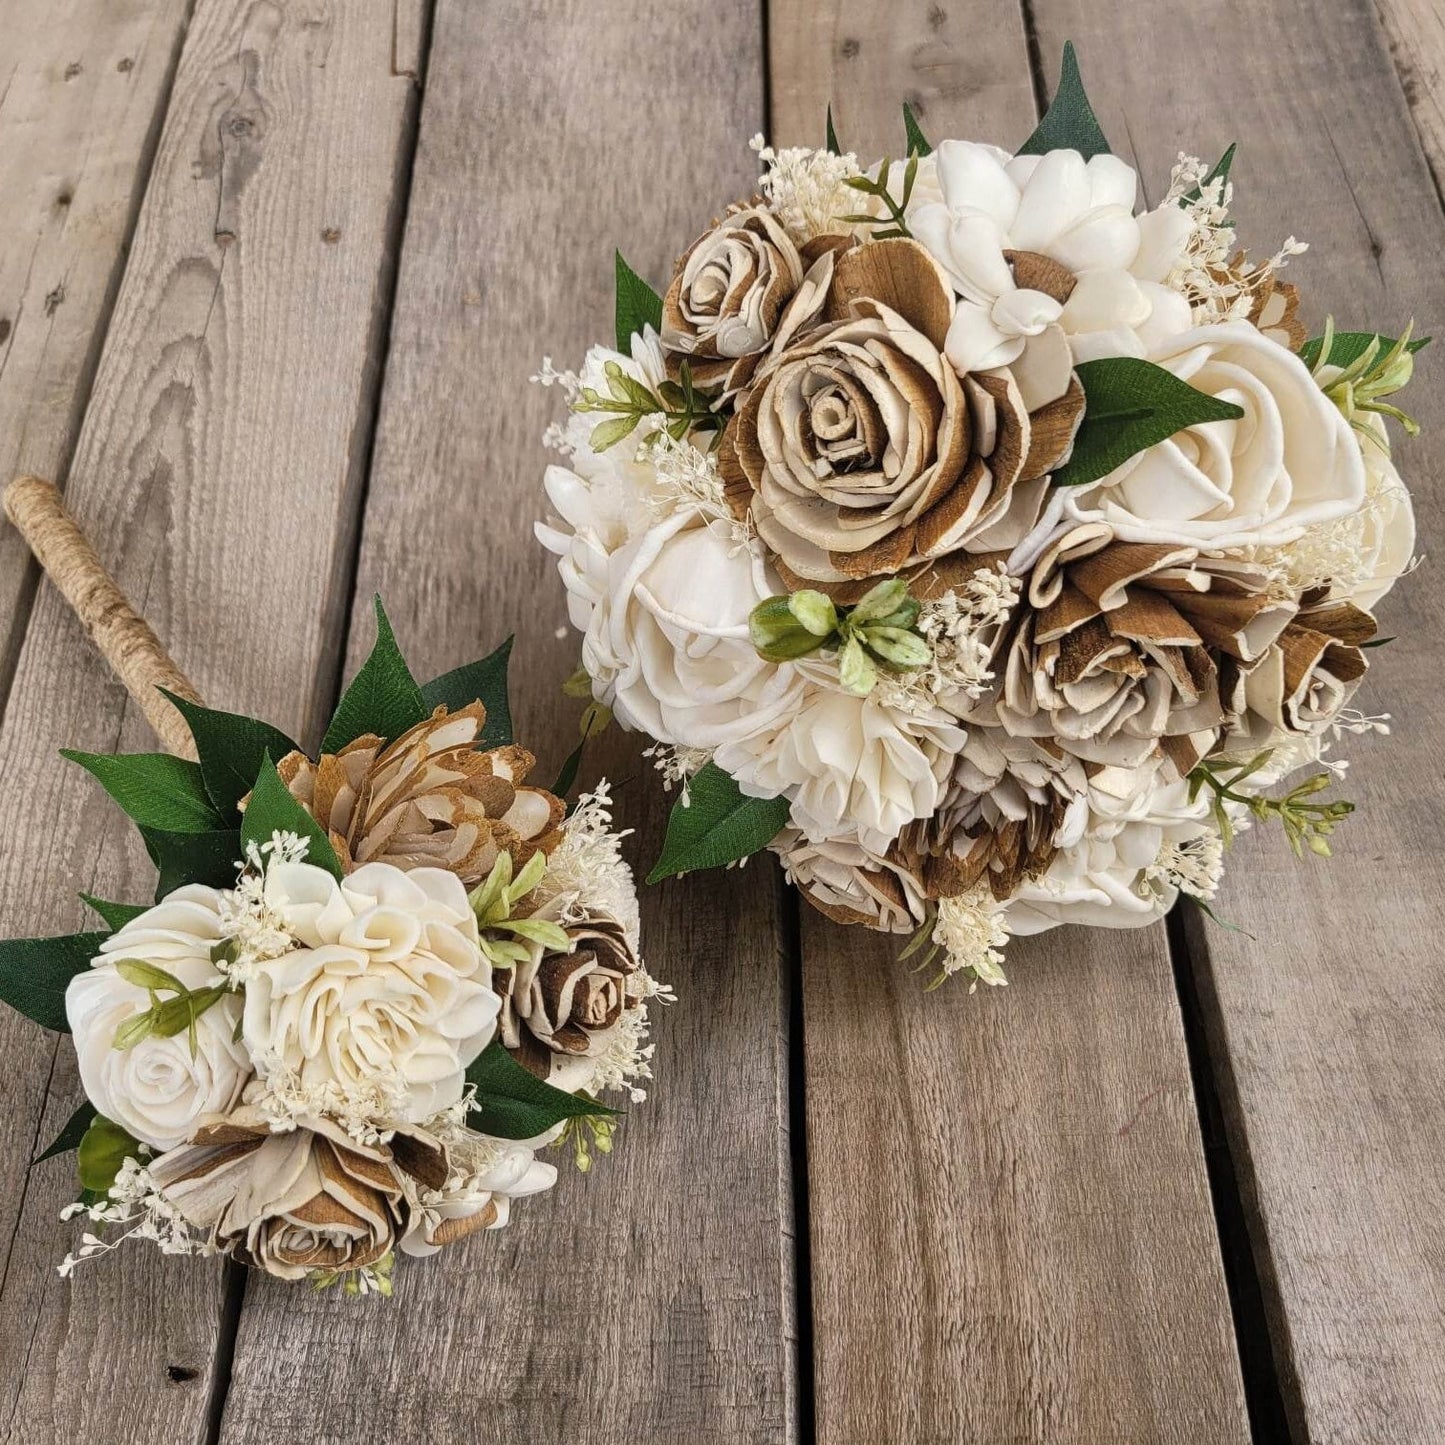 Wood Flower Bridal Bouquet, Rustic Wedding Bouquet, Natural Wooden Bride Bouquet, Sola Wood Wedding Flowers